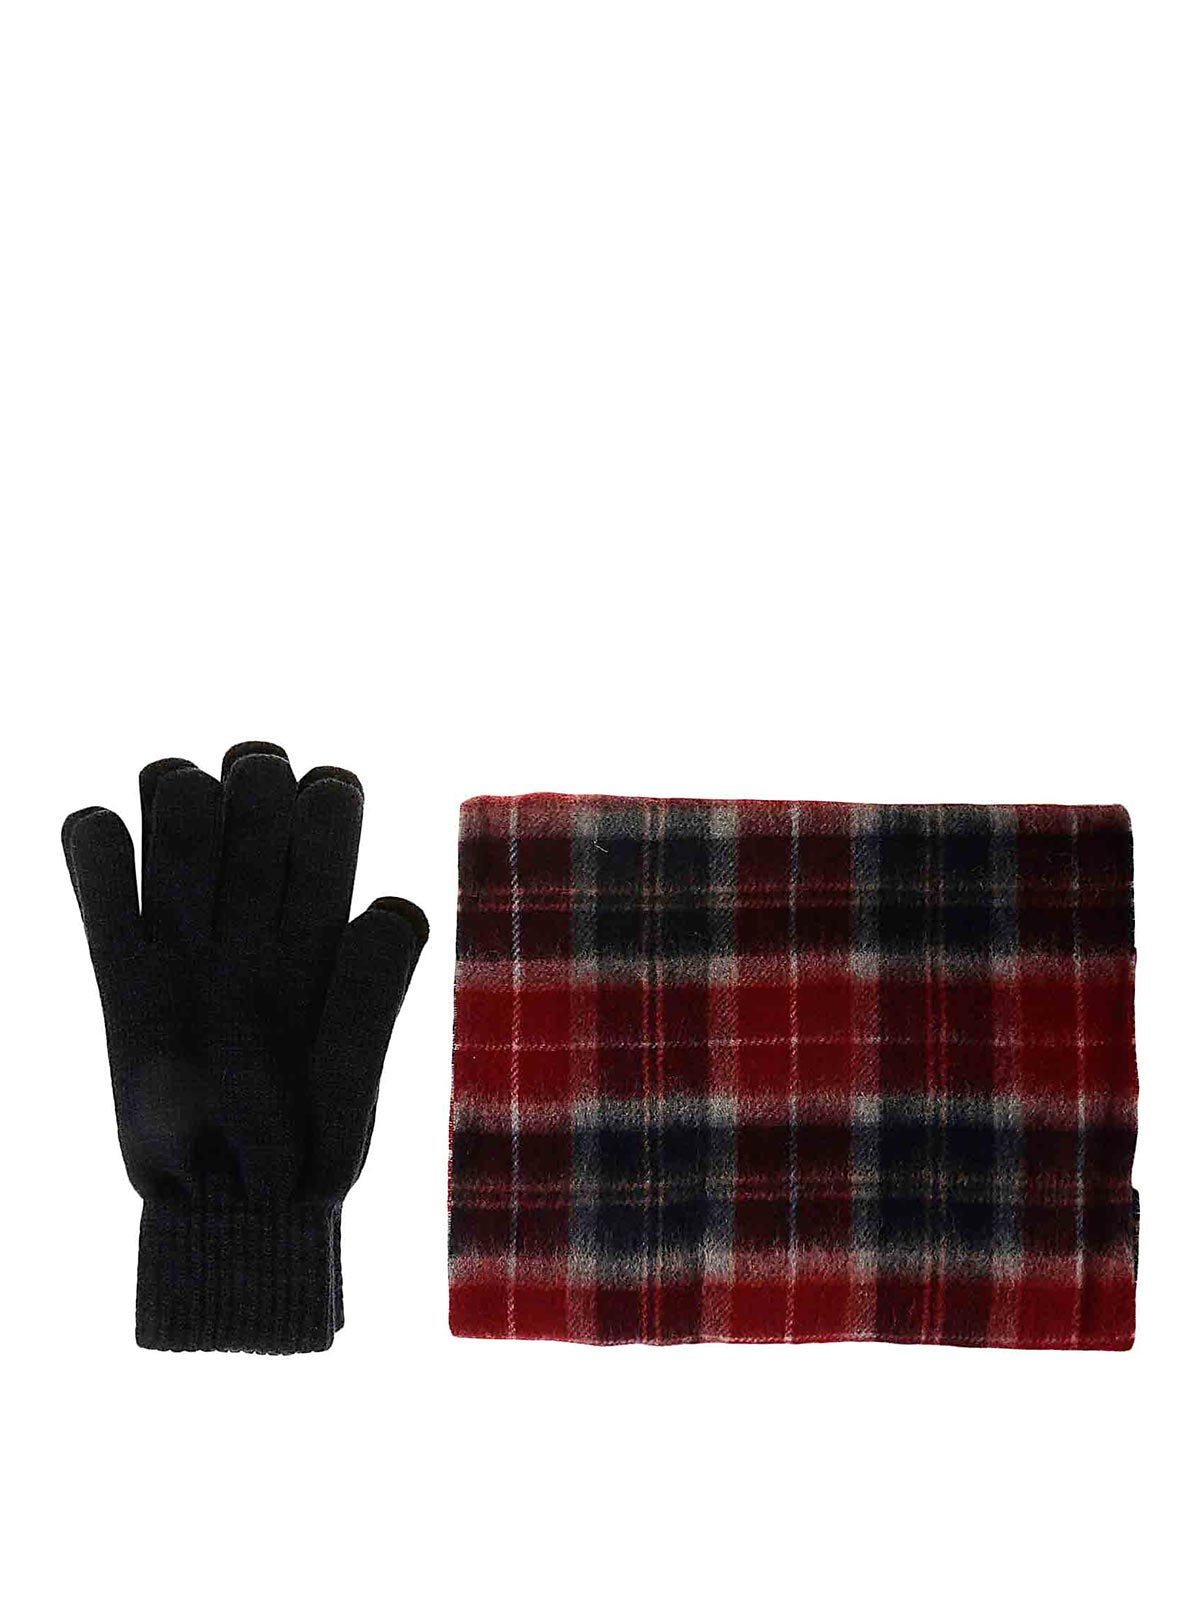 Barbour Tartan Scarf Glove Gift Set In Multicolour